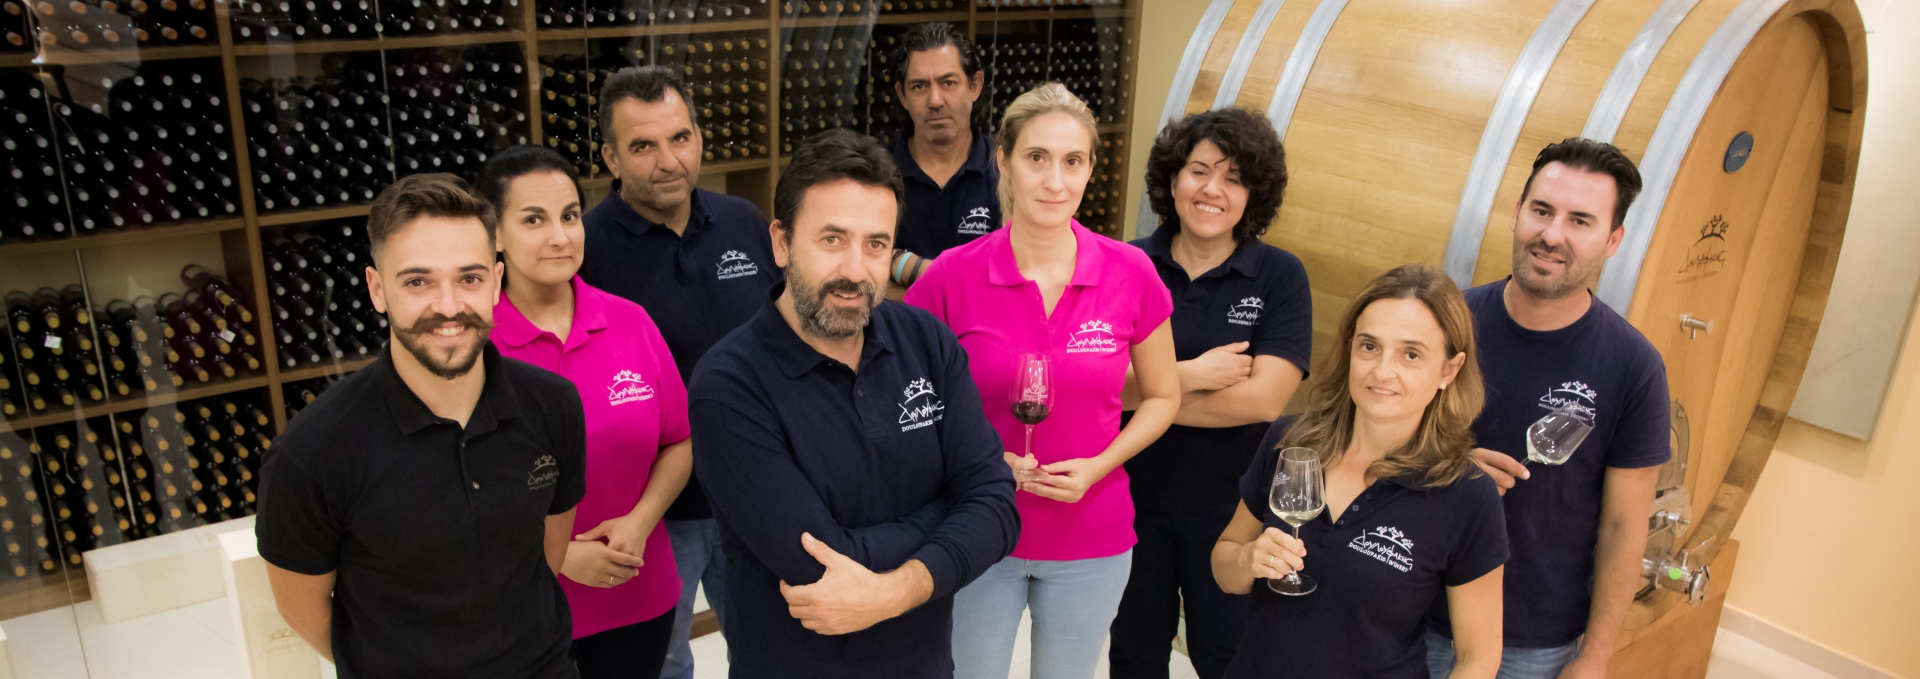 Команда винодельни Douloufakis из Дафнес, Крит, Греция